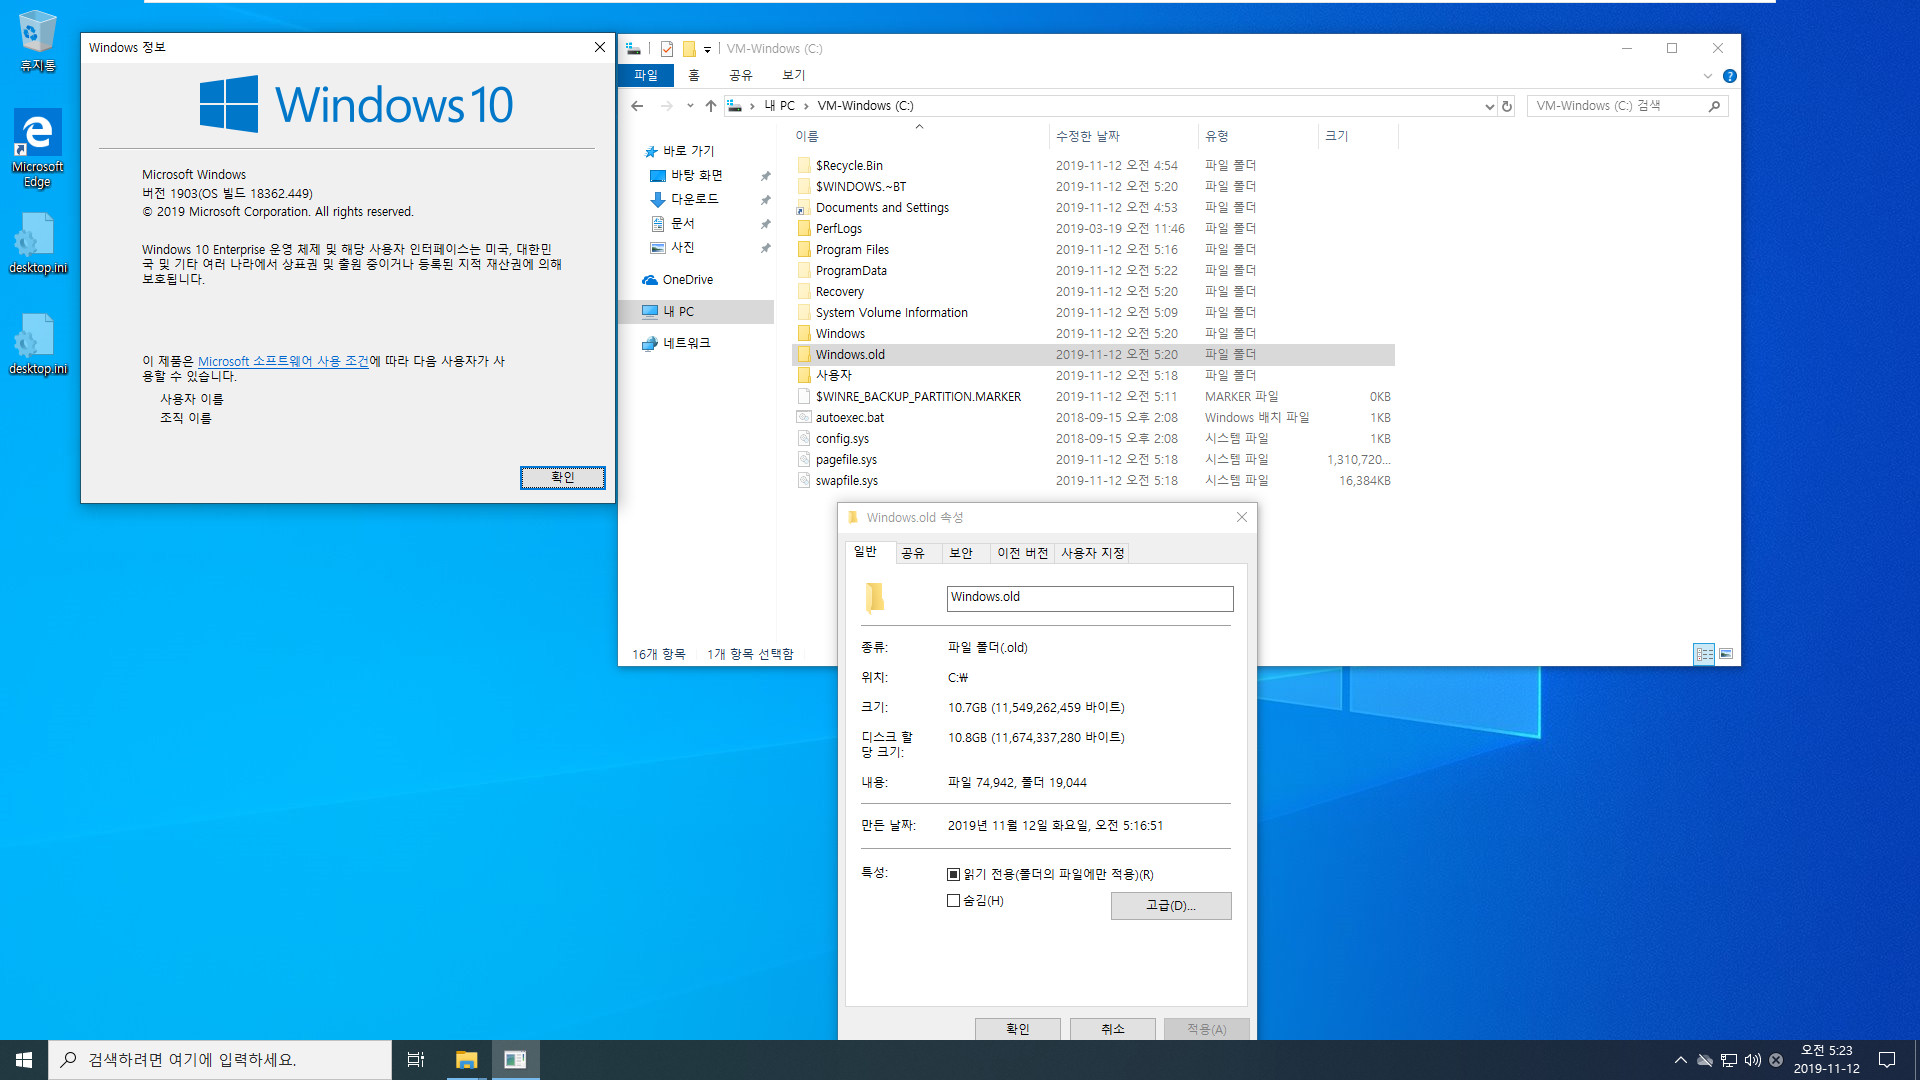 Windows 10 Enterprise LTSC [2019] (버전 1809) 를 버전 1903 프로로 업그레이드 설치하기 - 우선 설정과 앱 유지를 위해서 버전 1903 Enterprise로 업그레이드 한 후에 버전 1903 Pro로 변경하면 됩니다 2019-11-12_052356.jpg